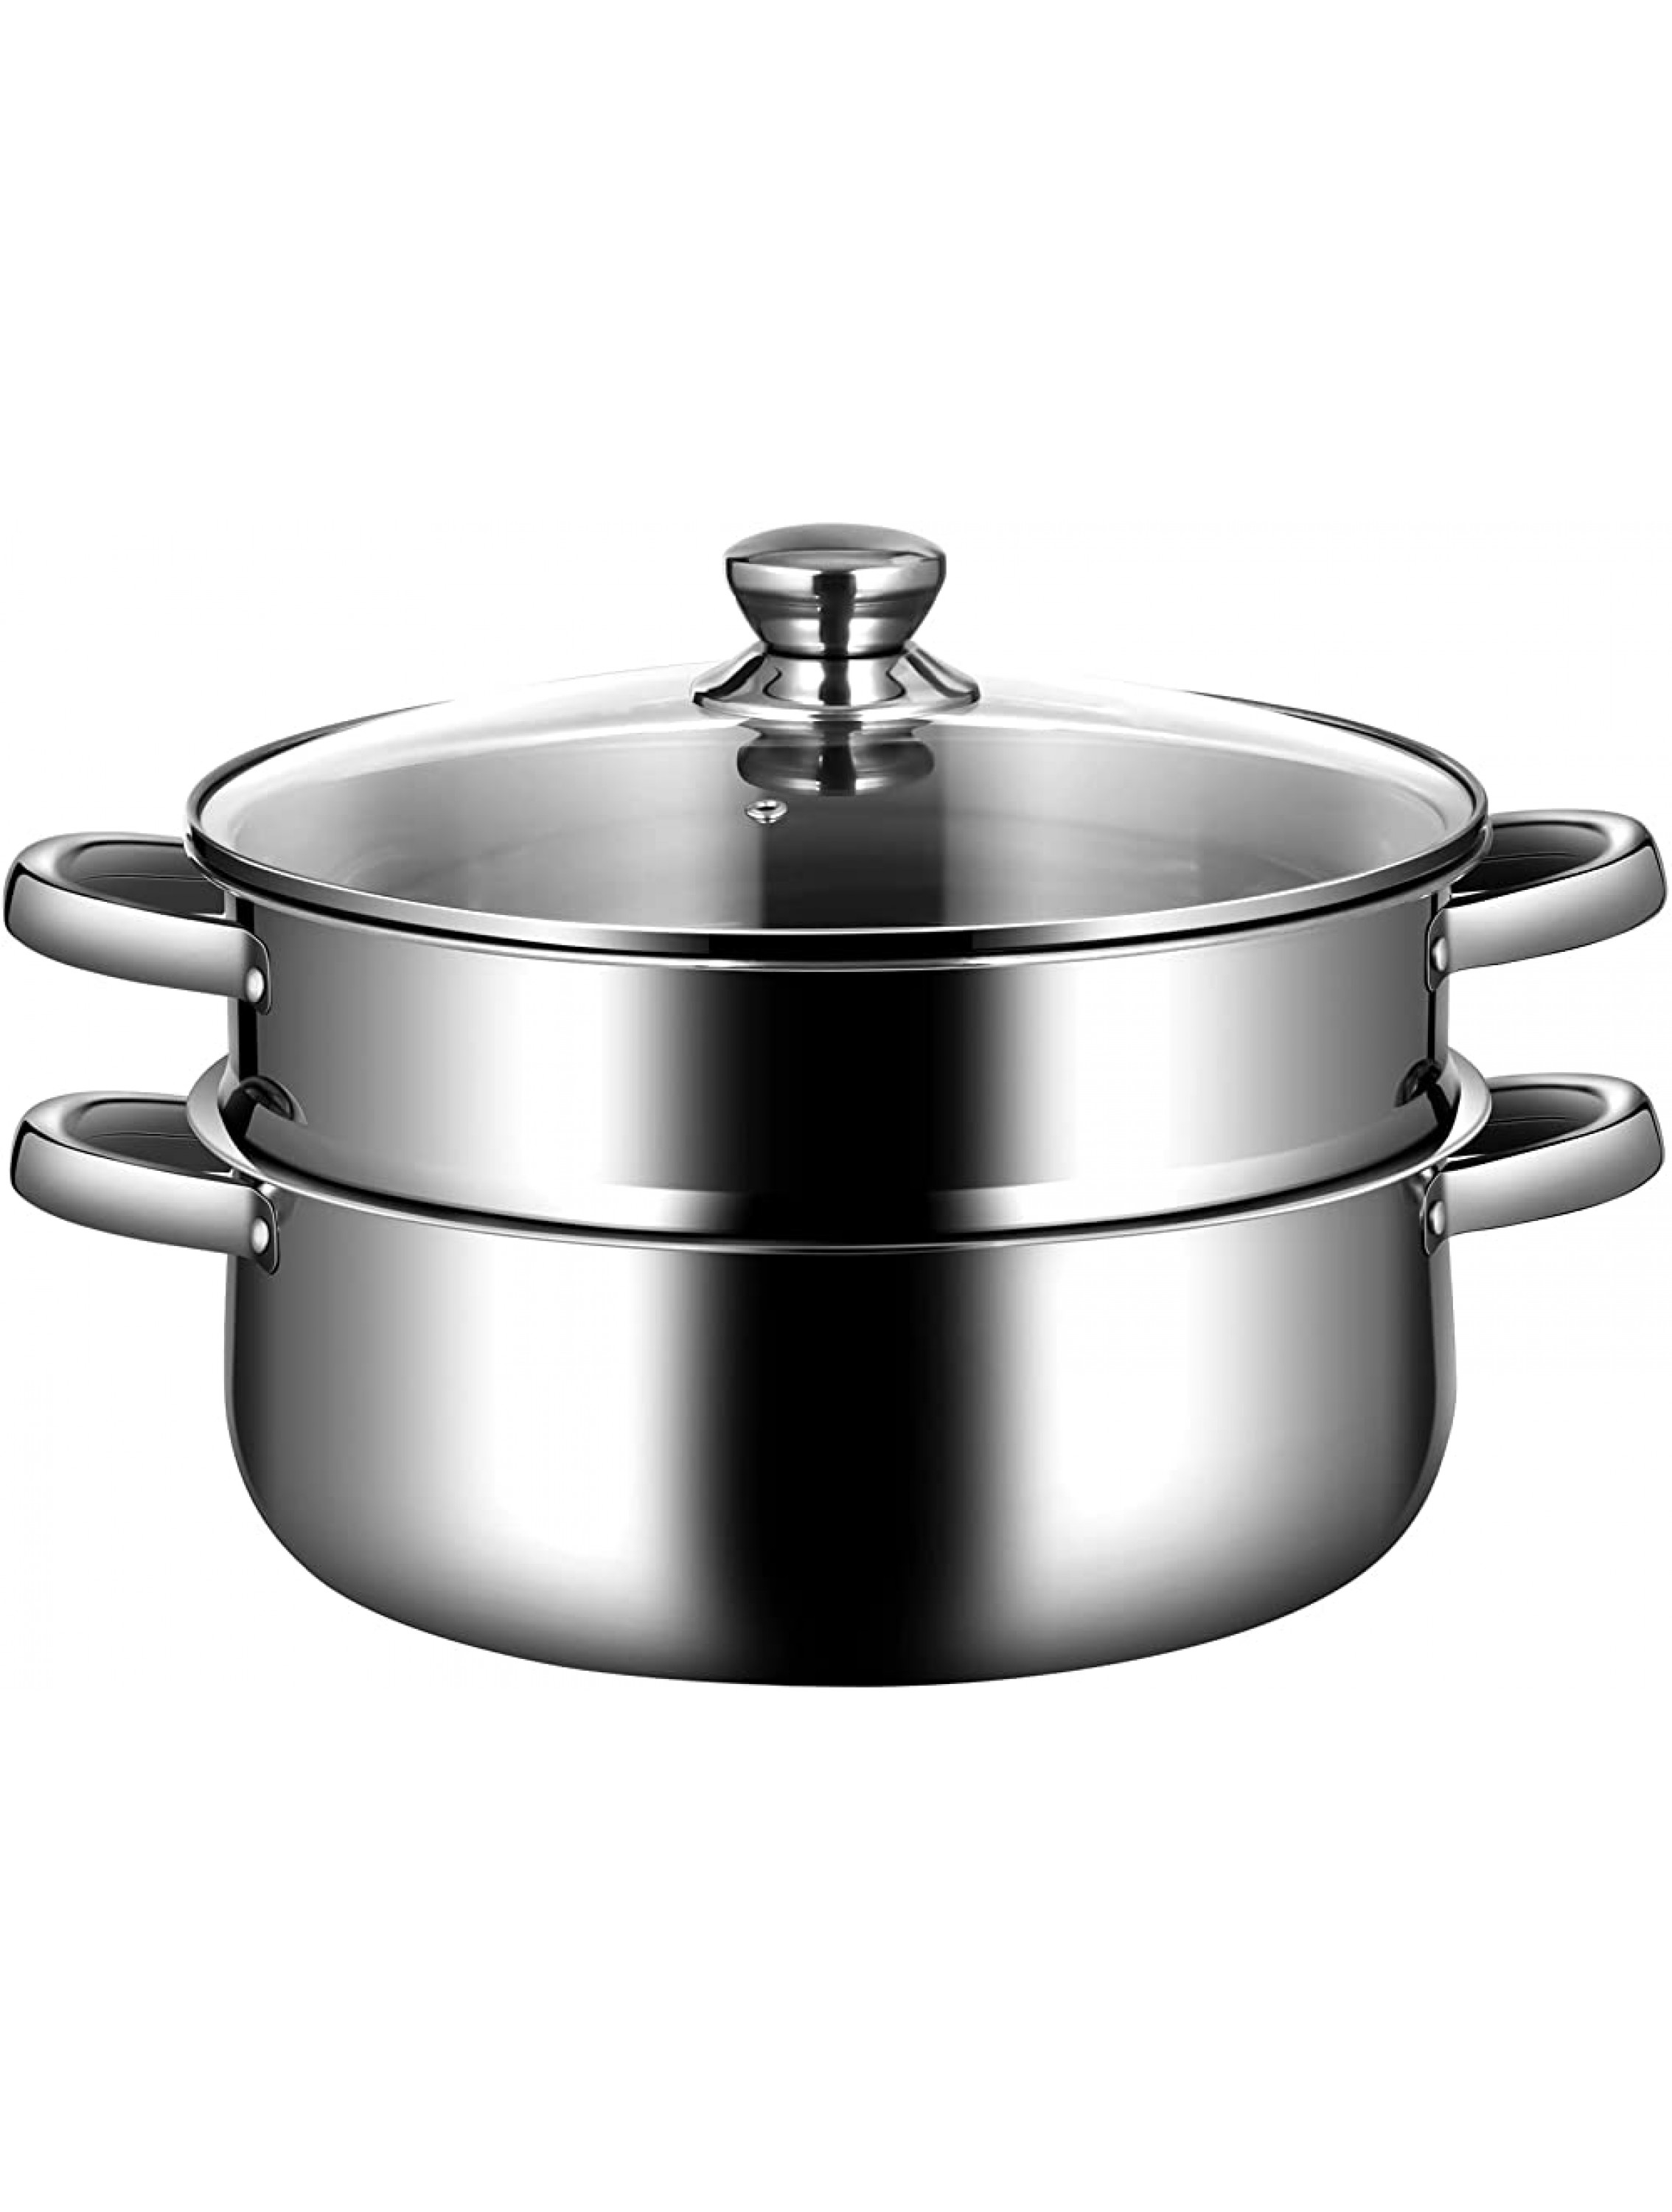 PETSITE 2-Tier Stainless Steel Steamer Pot 5.3 Quart Stockpot 4.2 Quart Steamer Basket & Tempered Glass Lid Steaming Cookware Oven & Dishwasher Safe - B14H0JP46